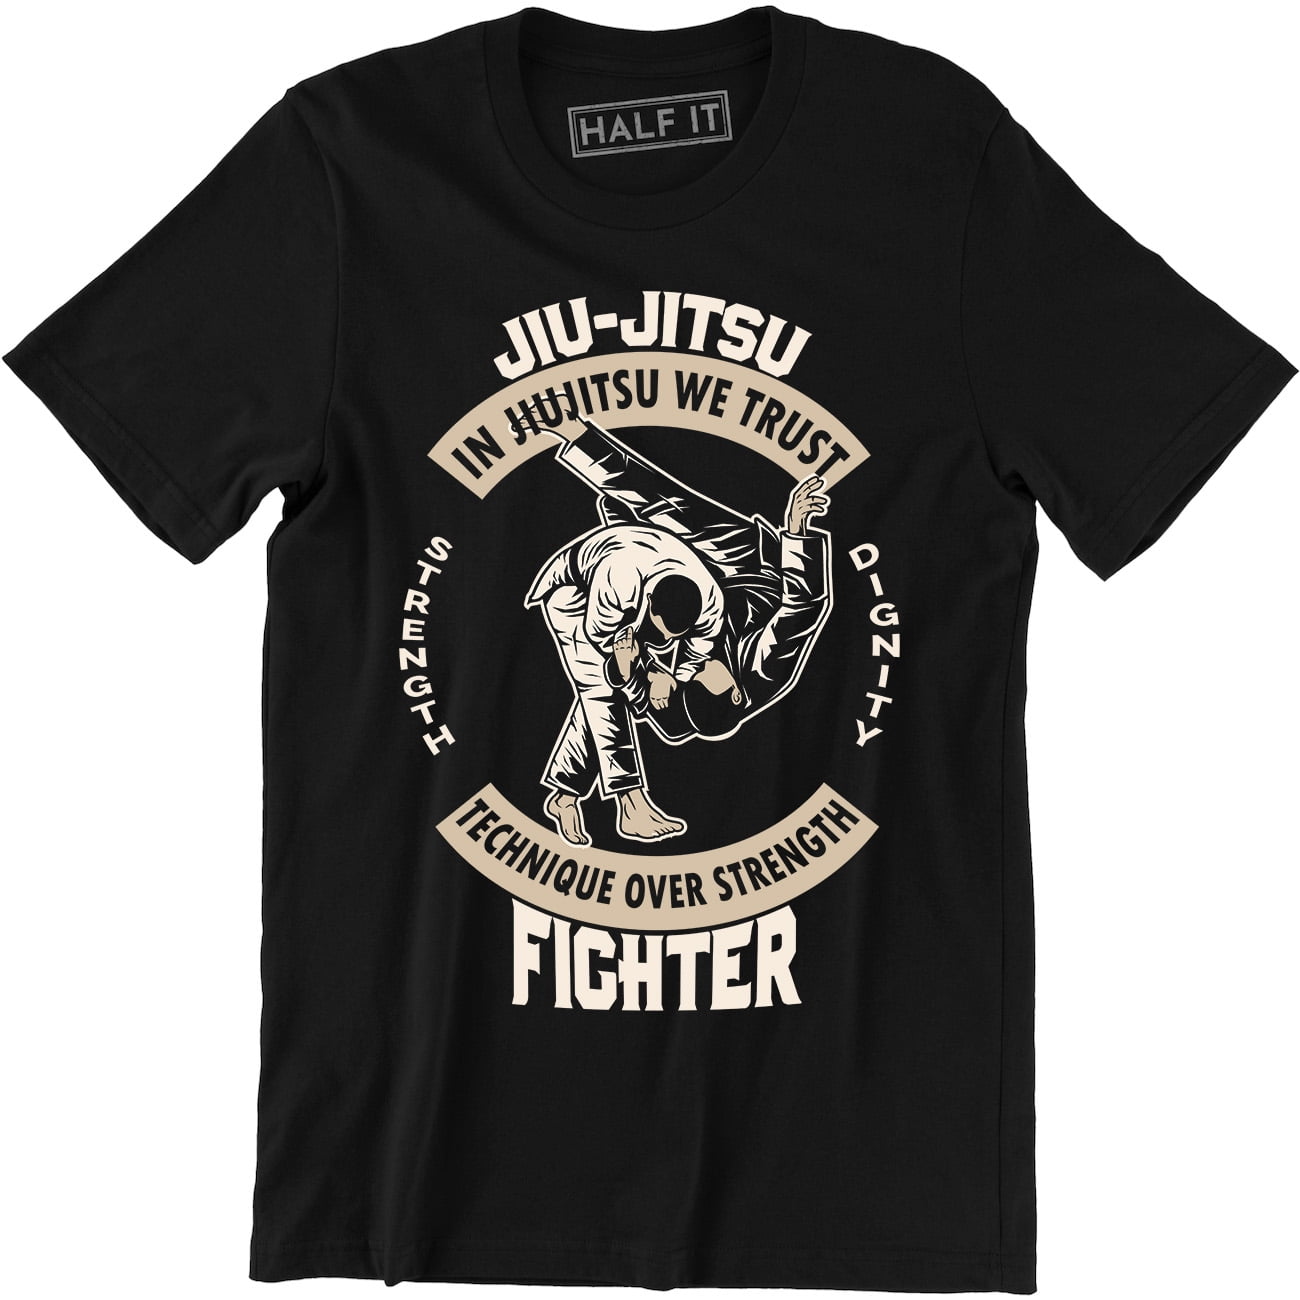 Half It - Jiu-Jitsu Technique Over Strength Fighter Martial Arts Men's ...